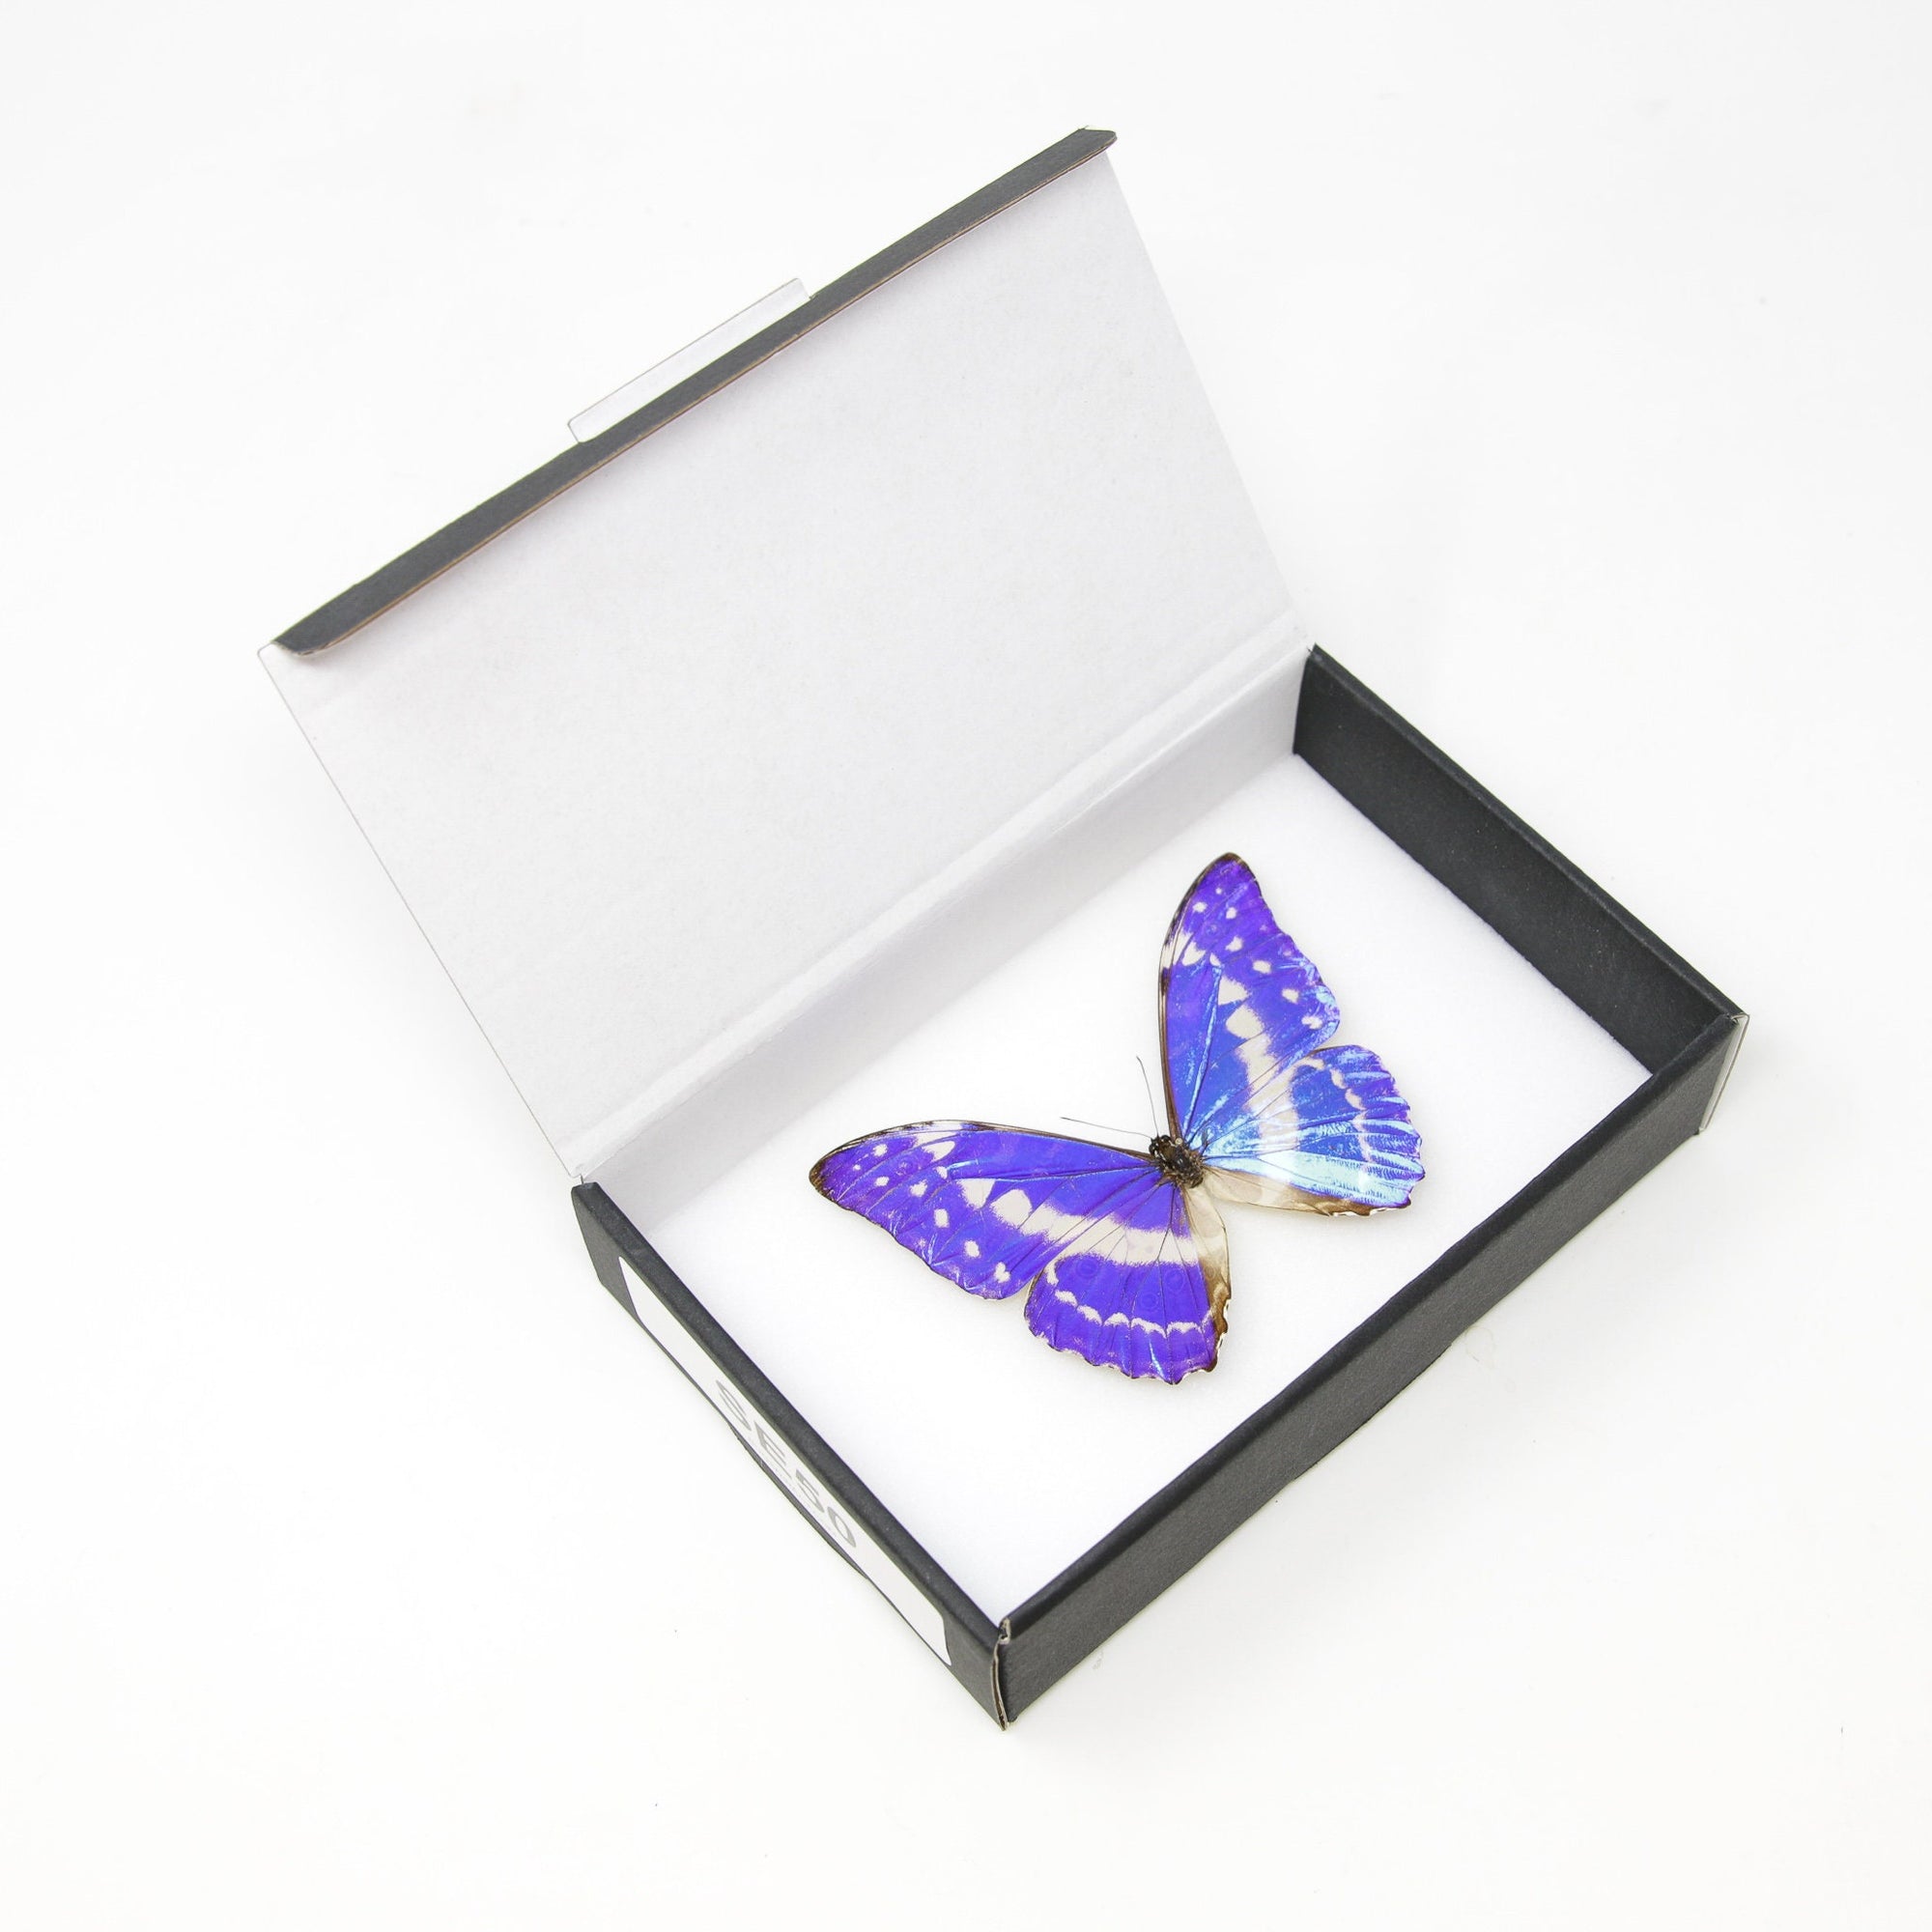 Cypris Morpho Butterfly (Morpho cypris) A1- SET SPECIMEN